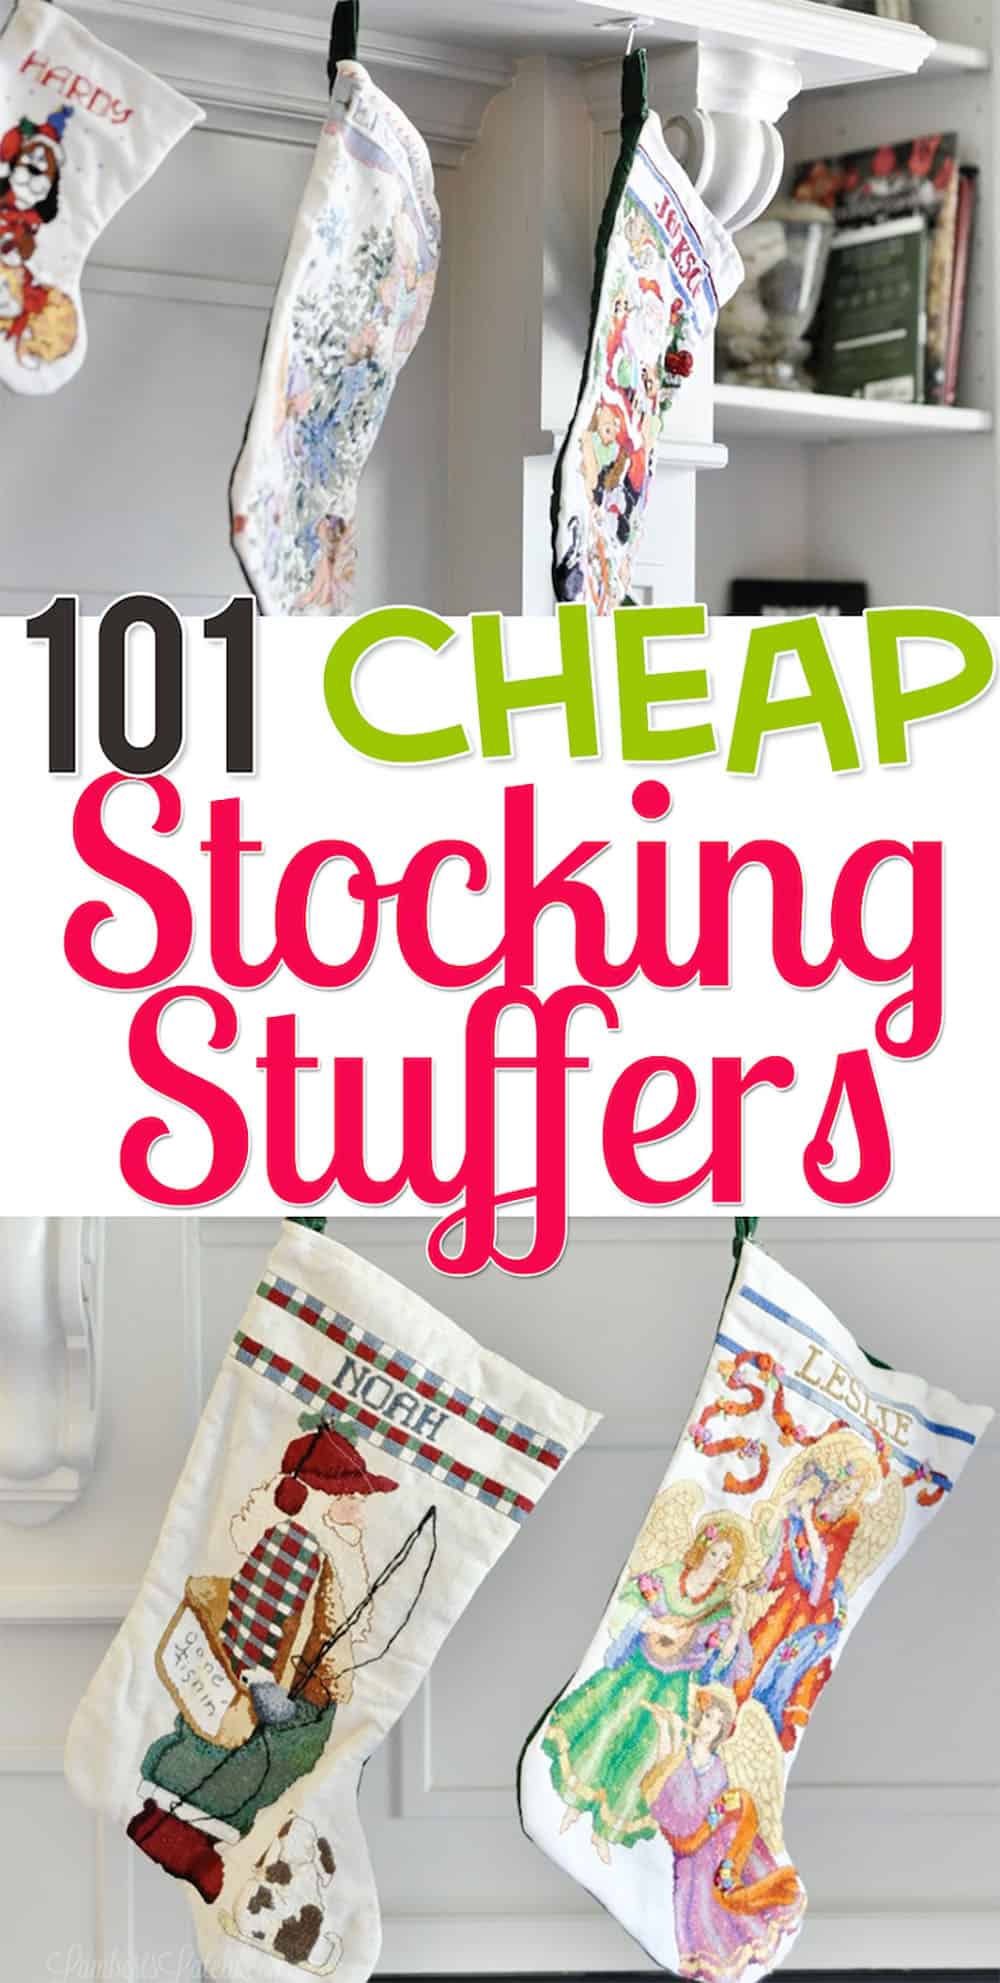 Over 100 cheap stocking stuffer ideas